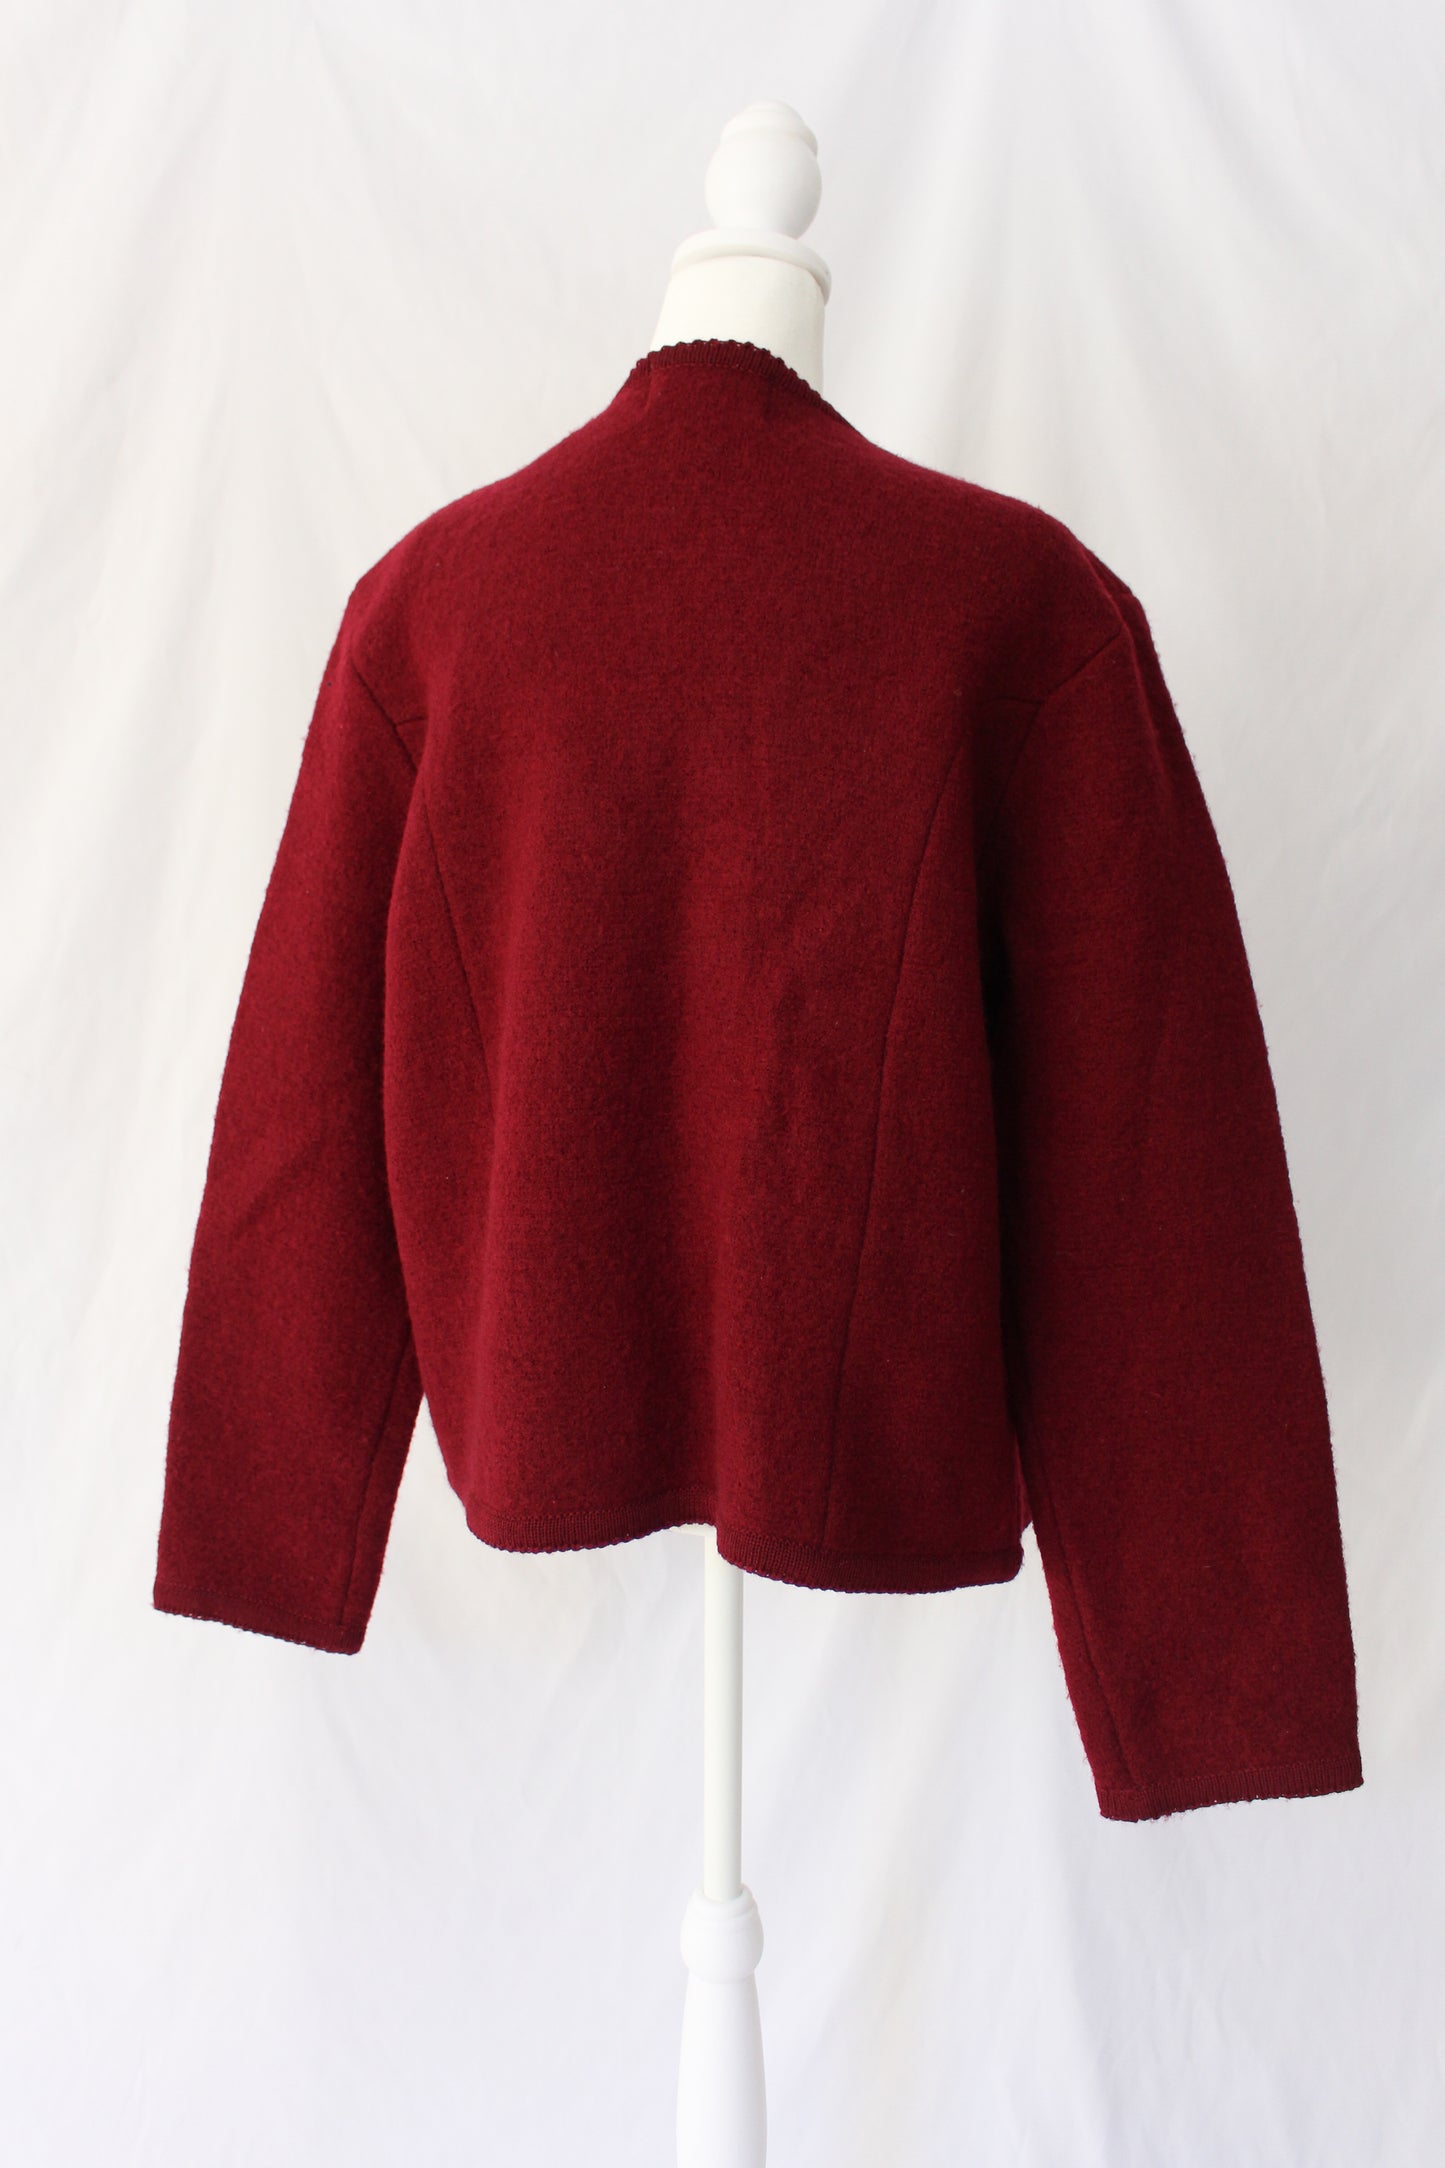 vintage red cardigan, 100% wool sweater